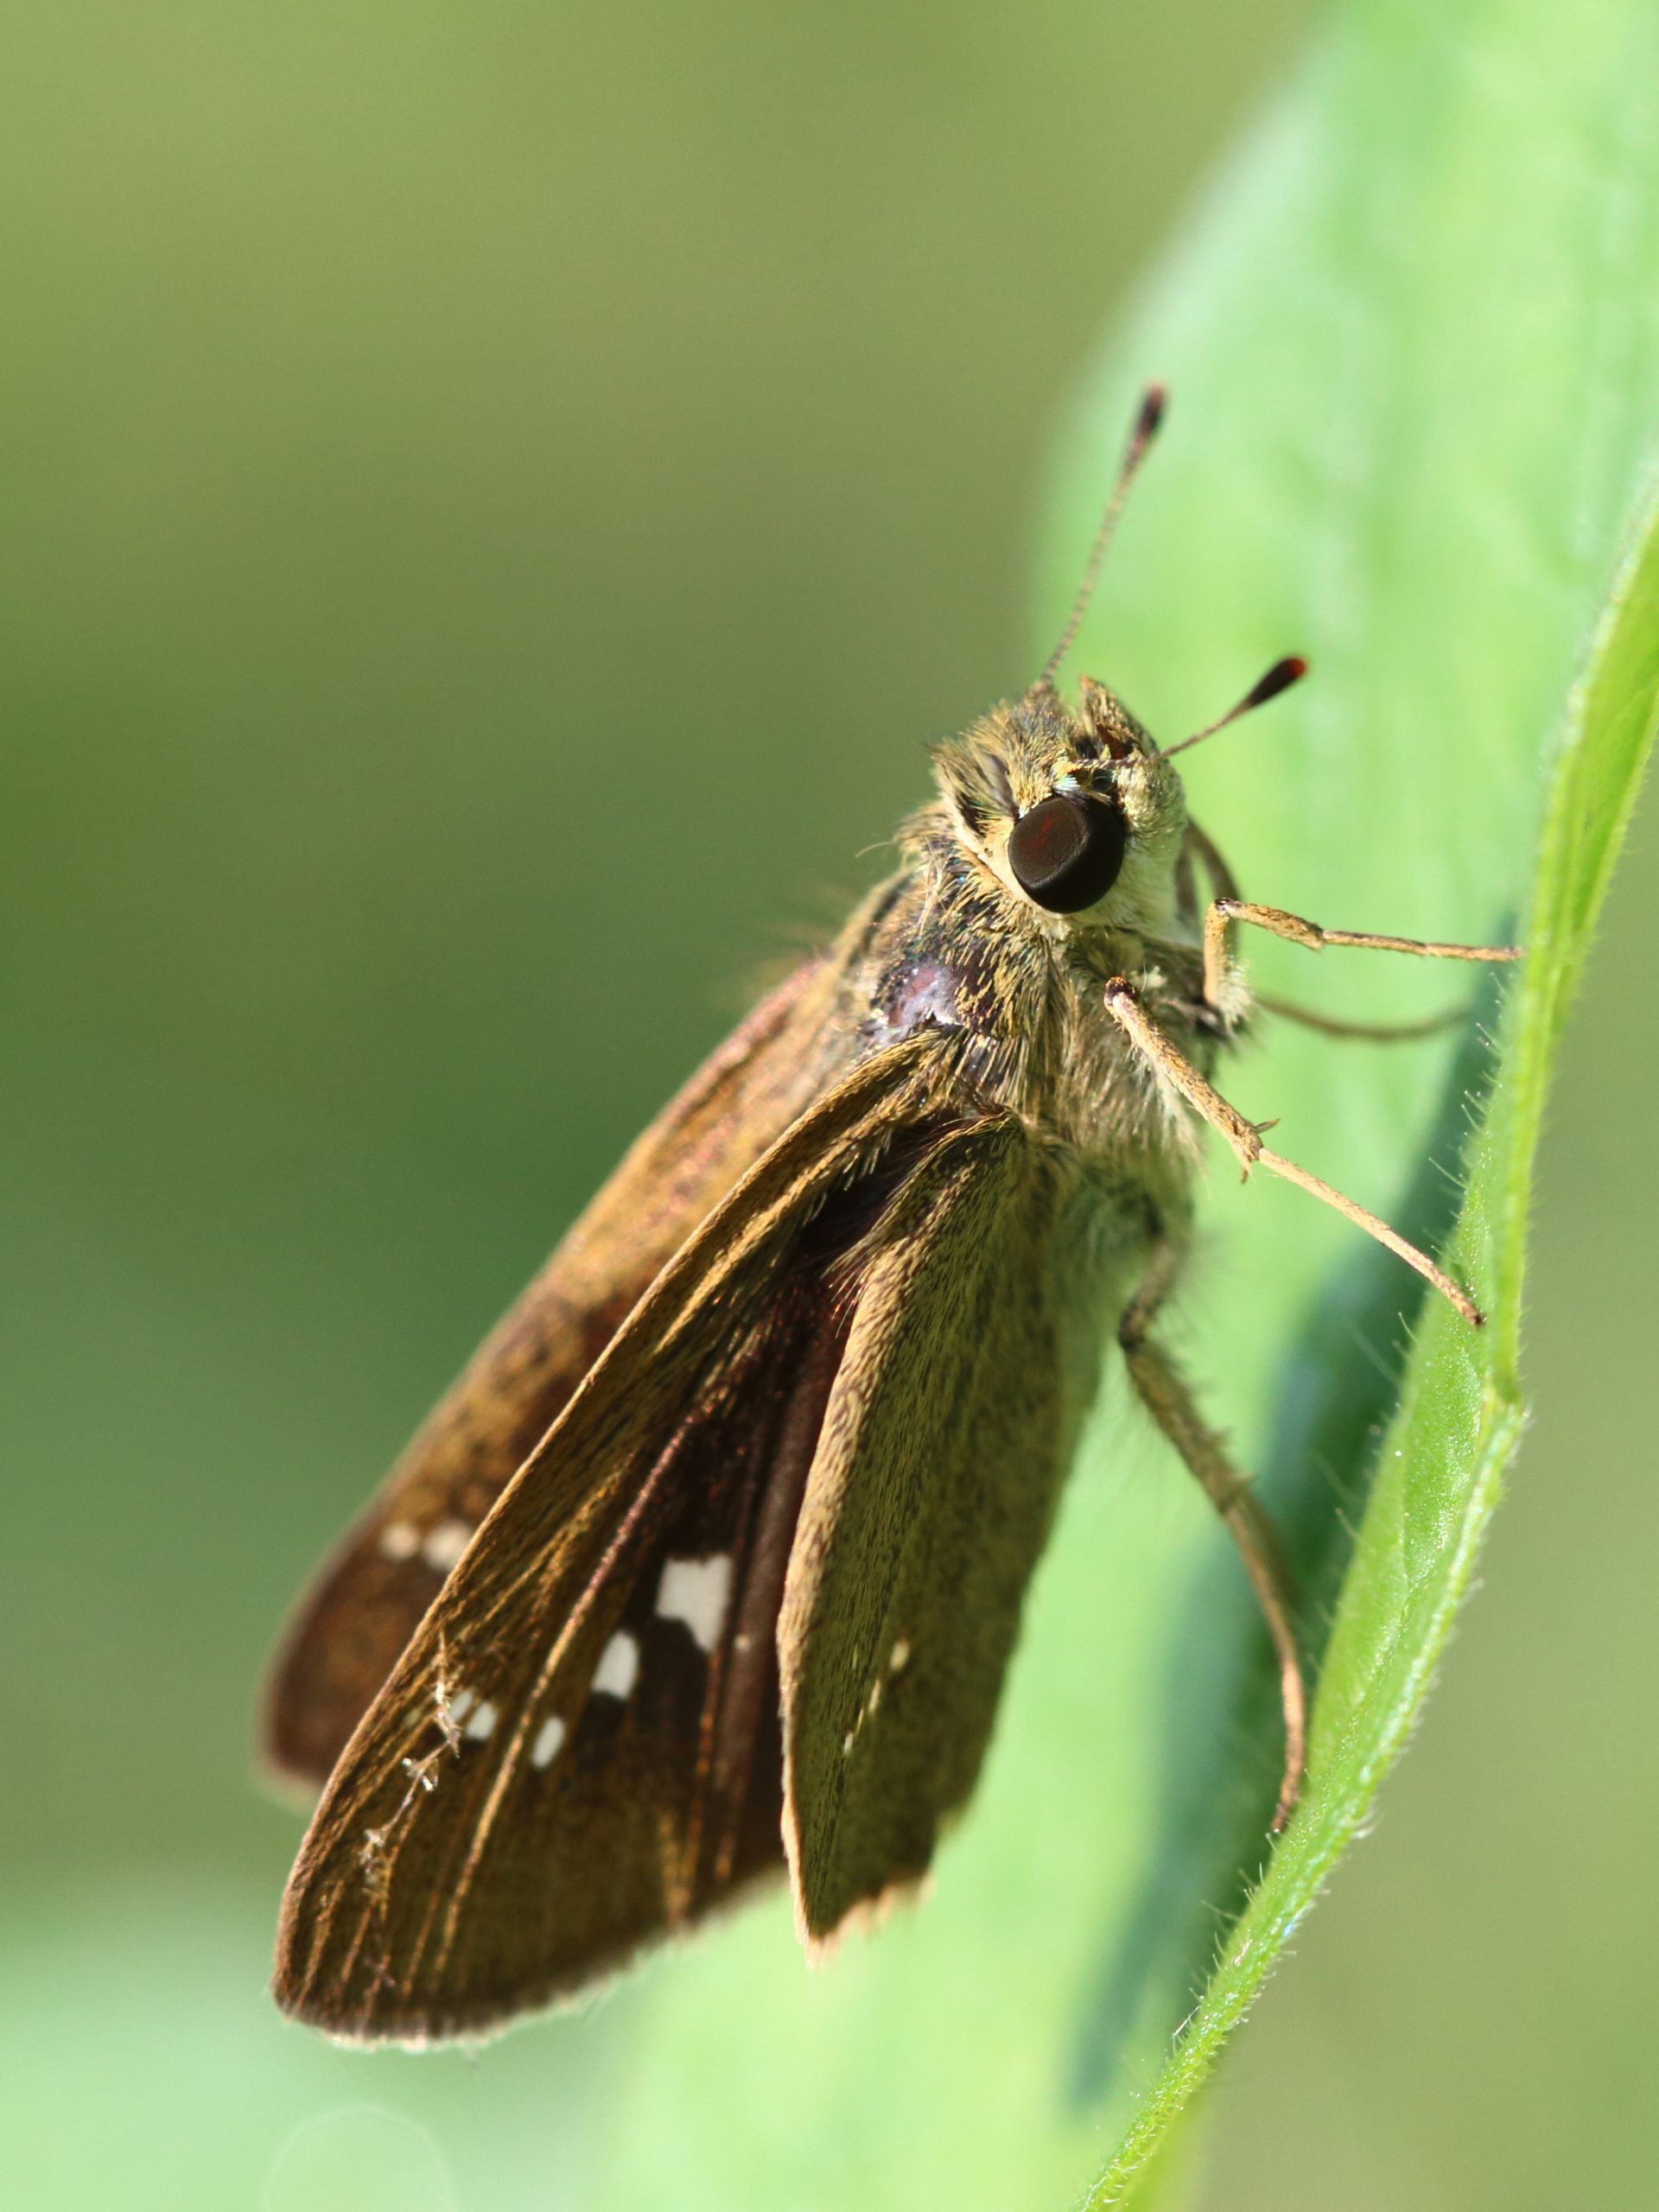 A skipper butterfly